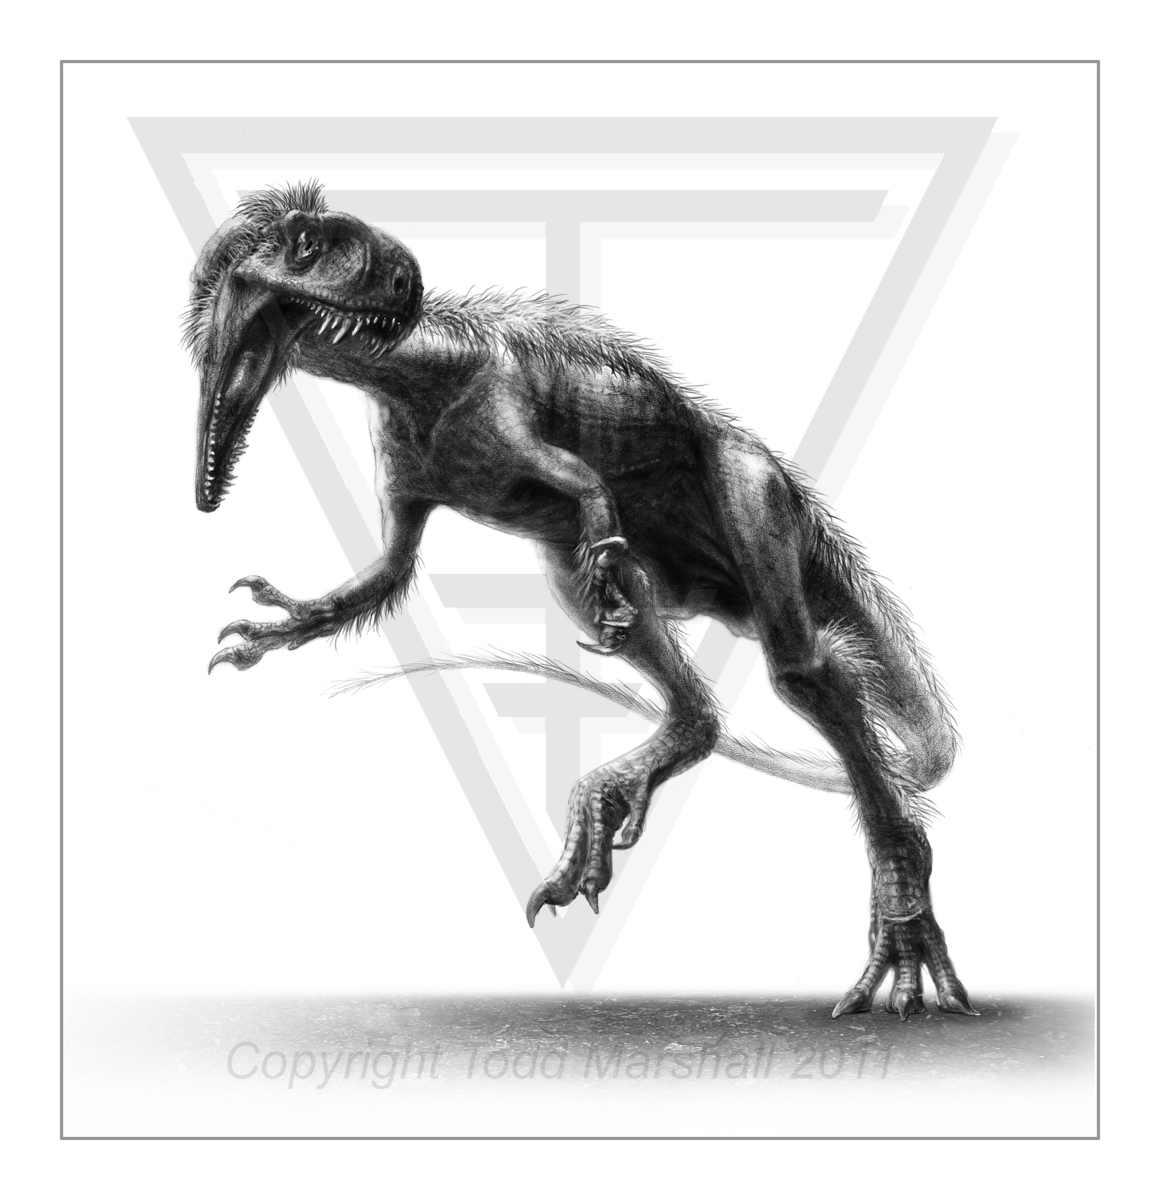 Adobe Portfolio Dinosaur dinosaur art paleo-art prehistoric animals prehistoric